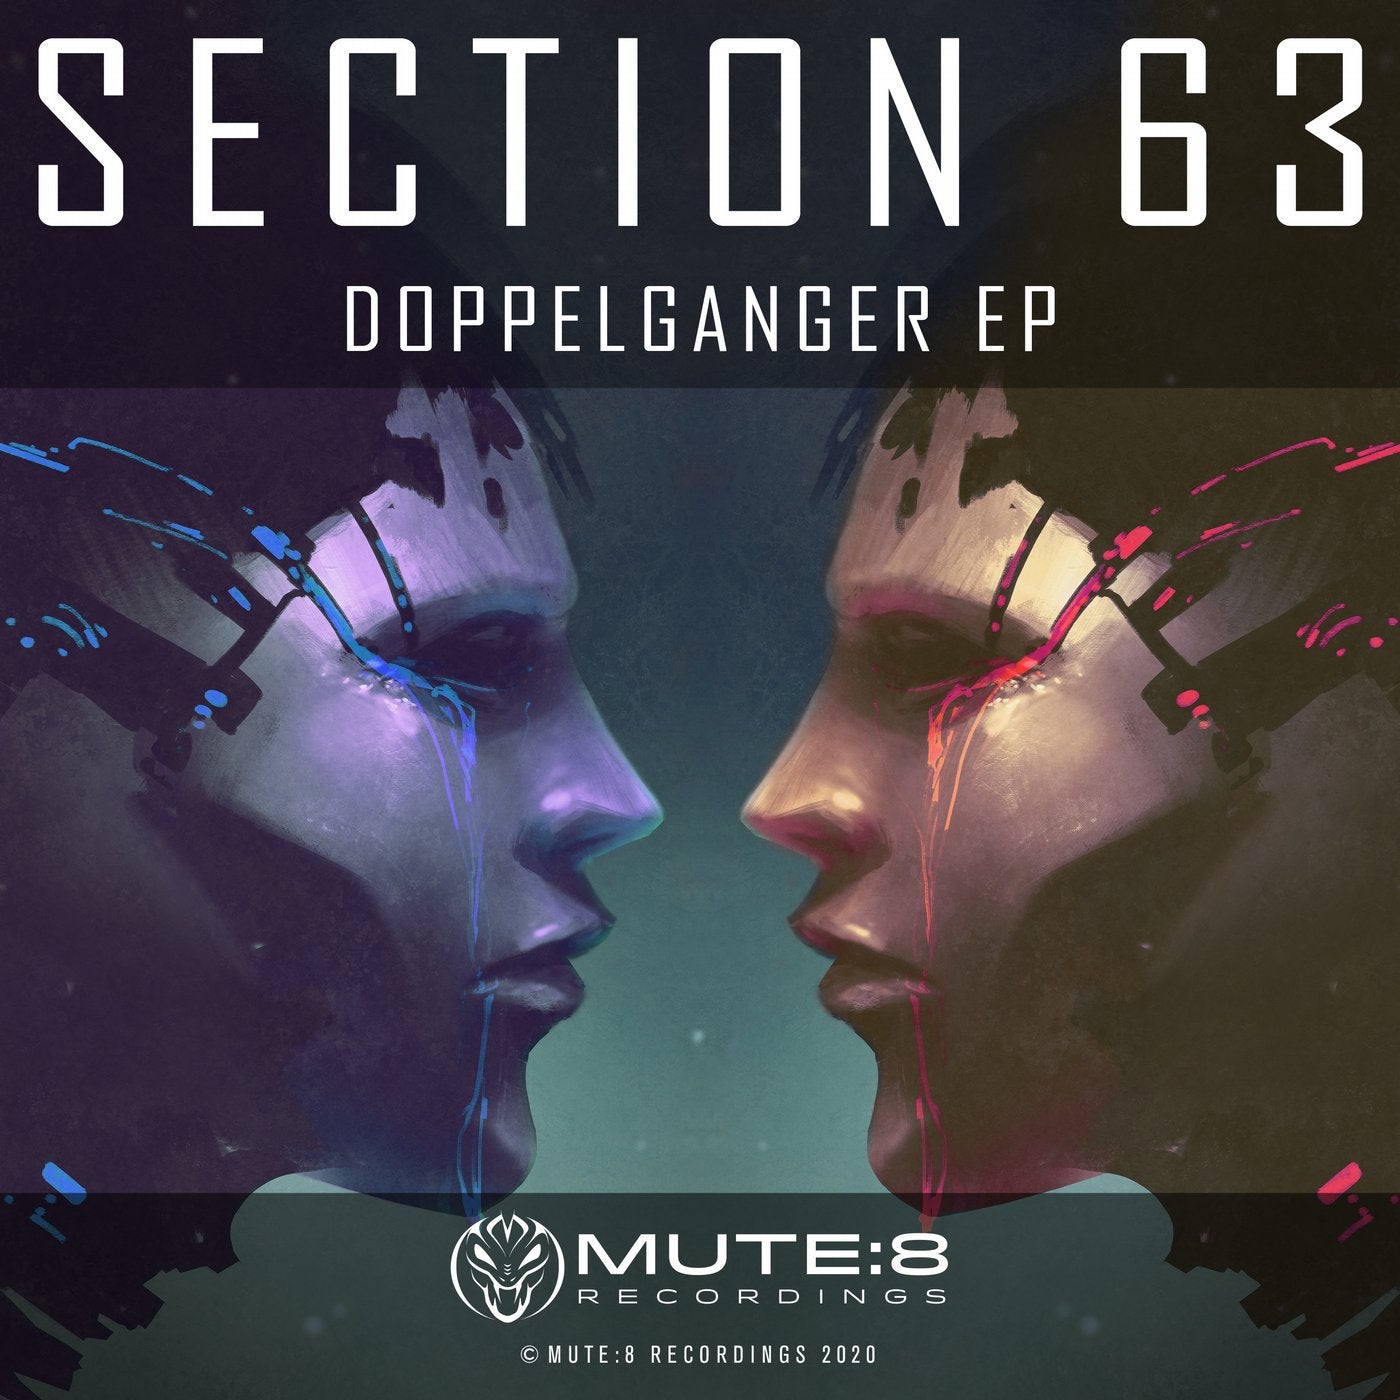 Doppleganger EP - Original Mix